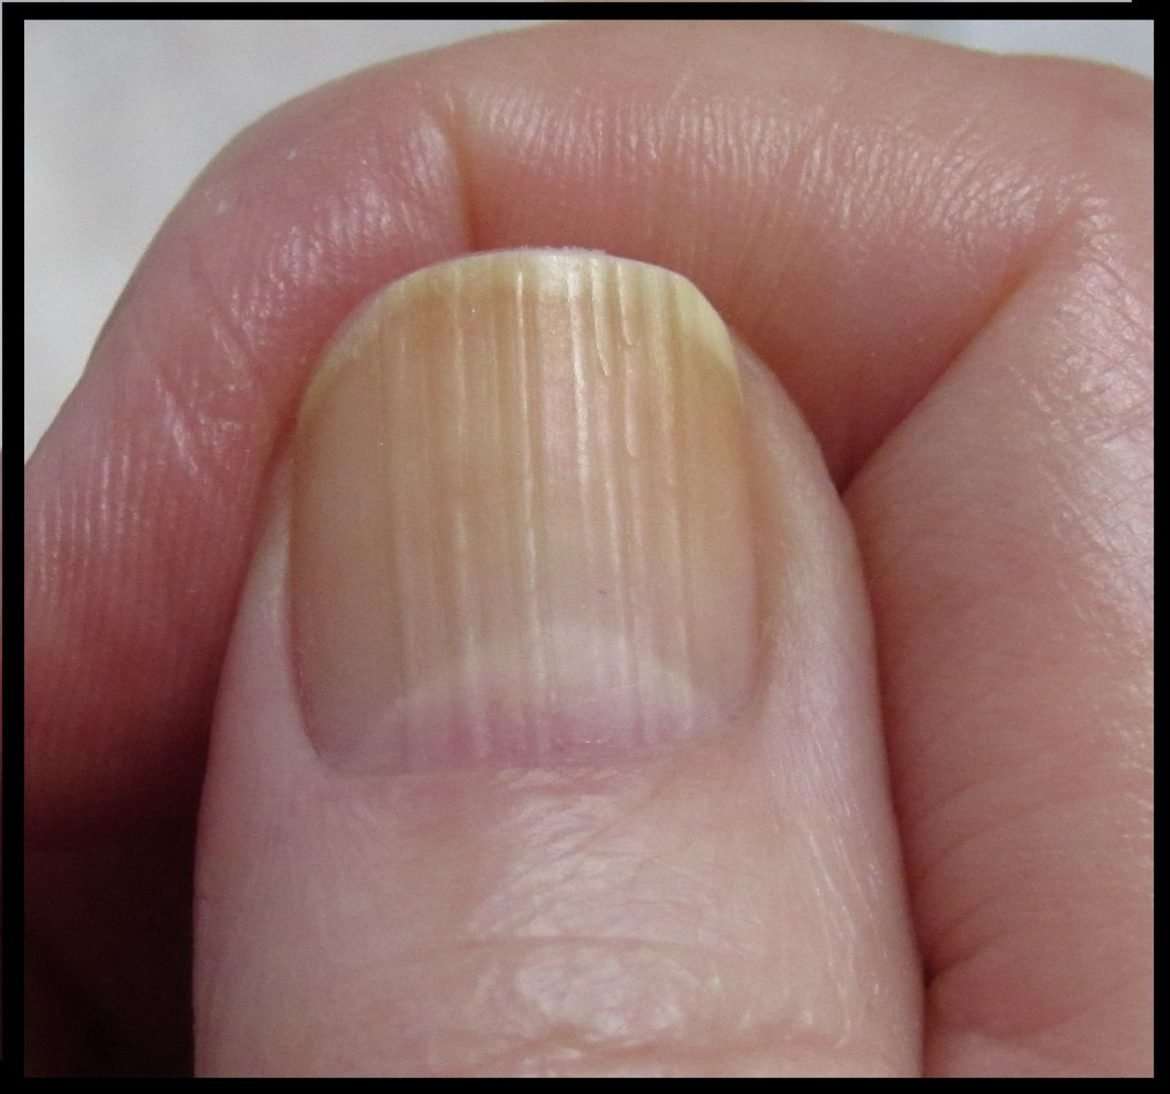 What do horizontal ridges on fingernails mean